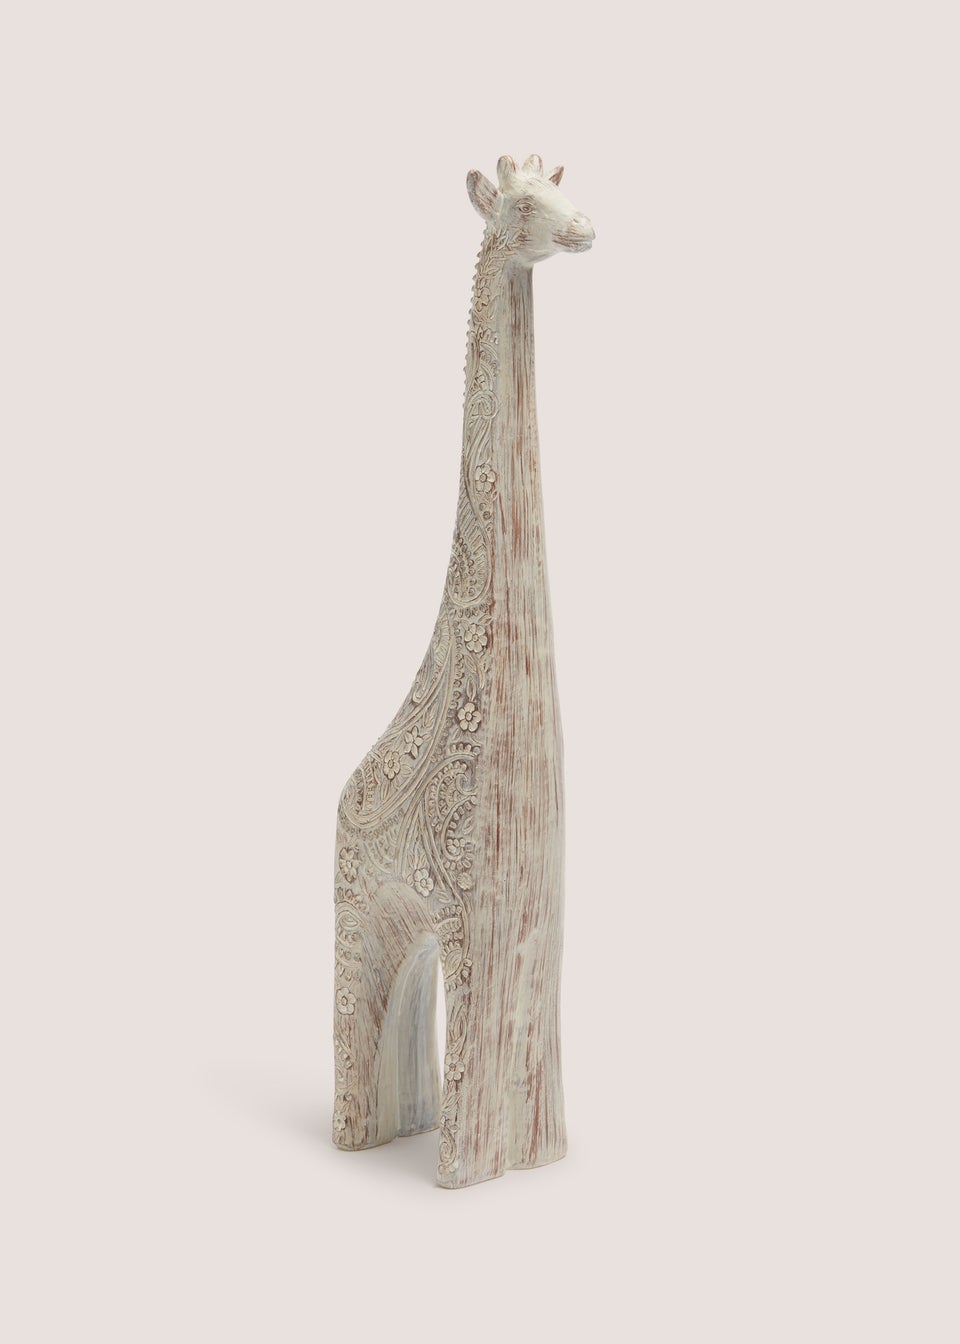 Grey Giraffe Ornament (29cm x 38cm x 40cm)